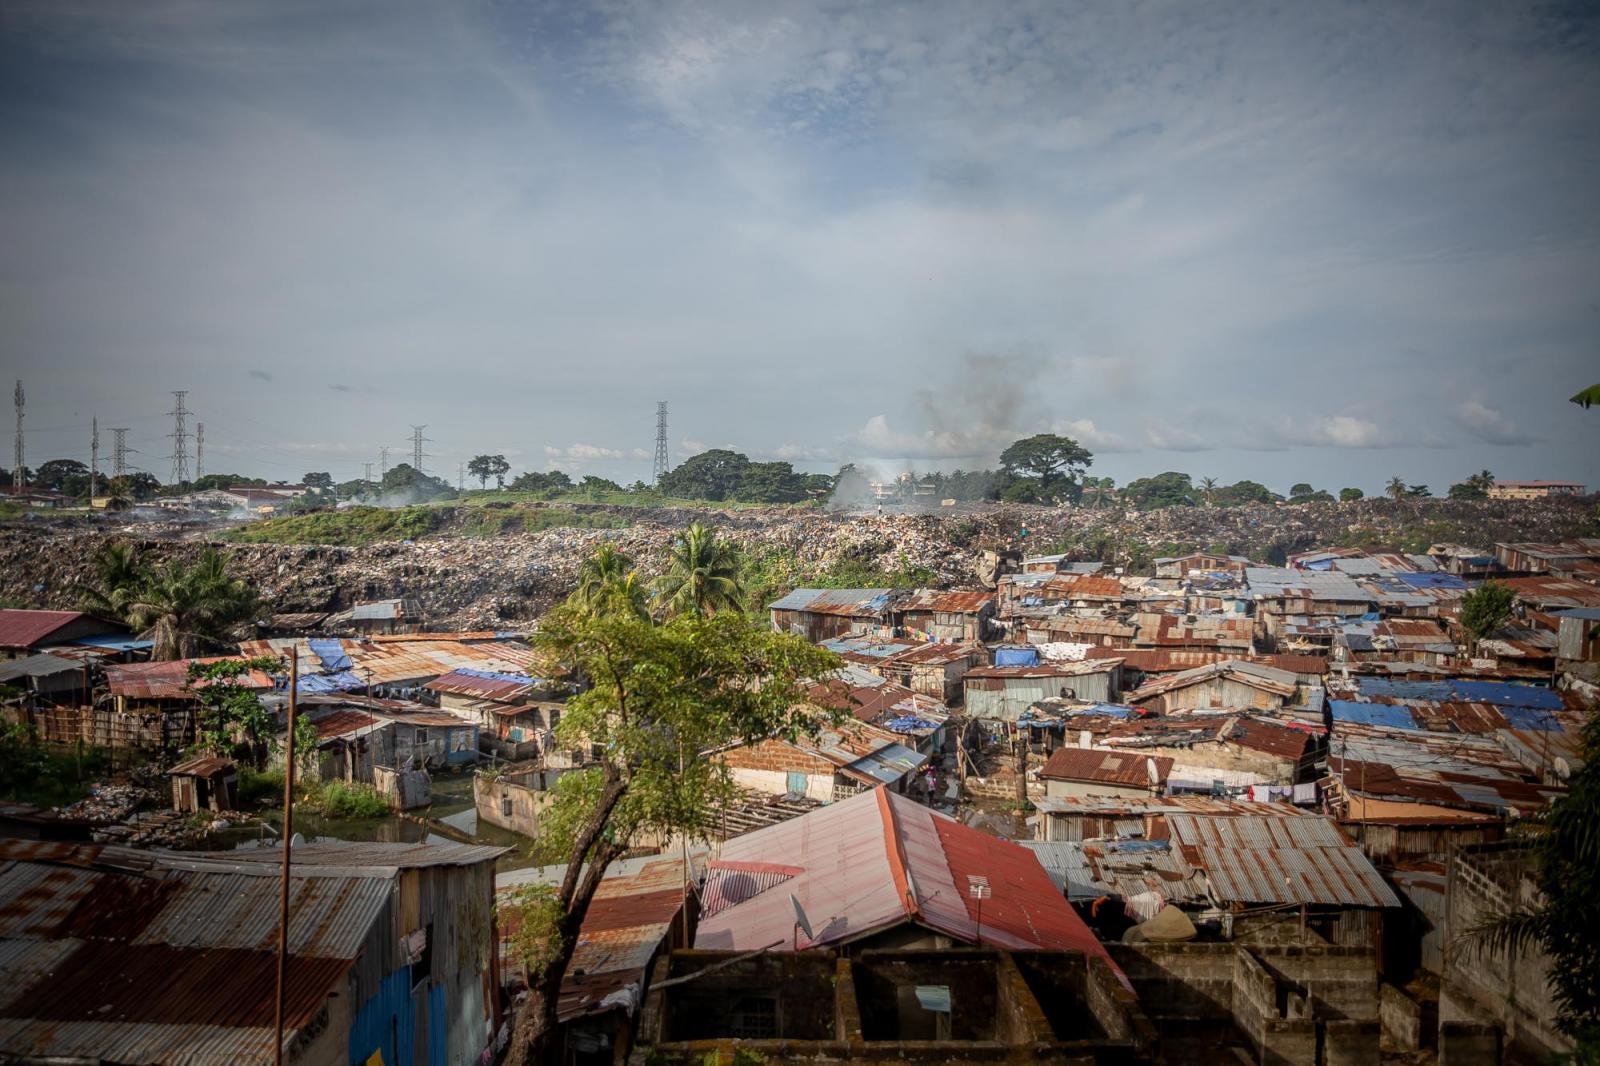 View of the river basis. A dump...r 2019, Freetown, Sierra Leone.